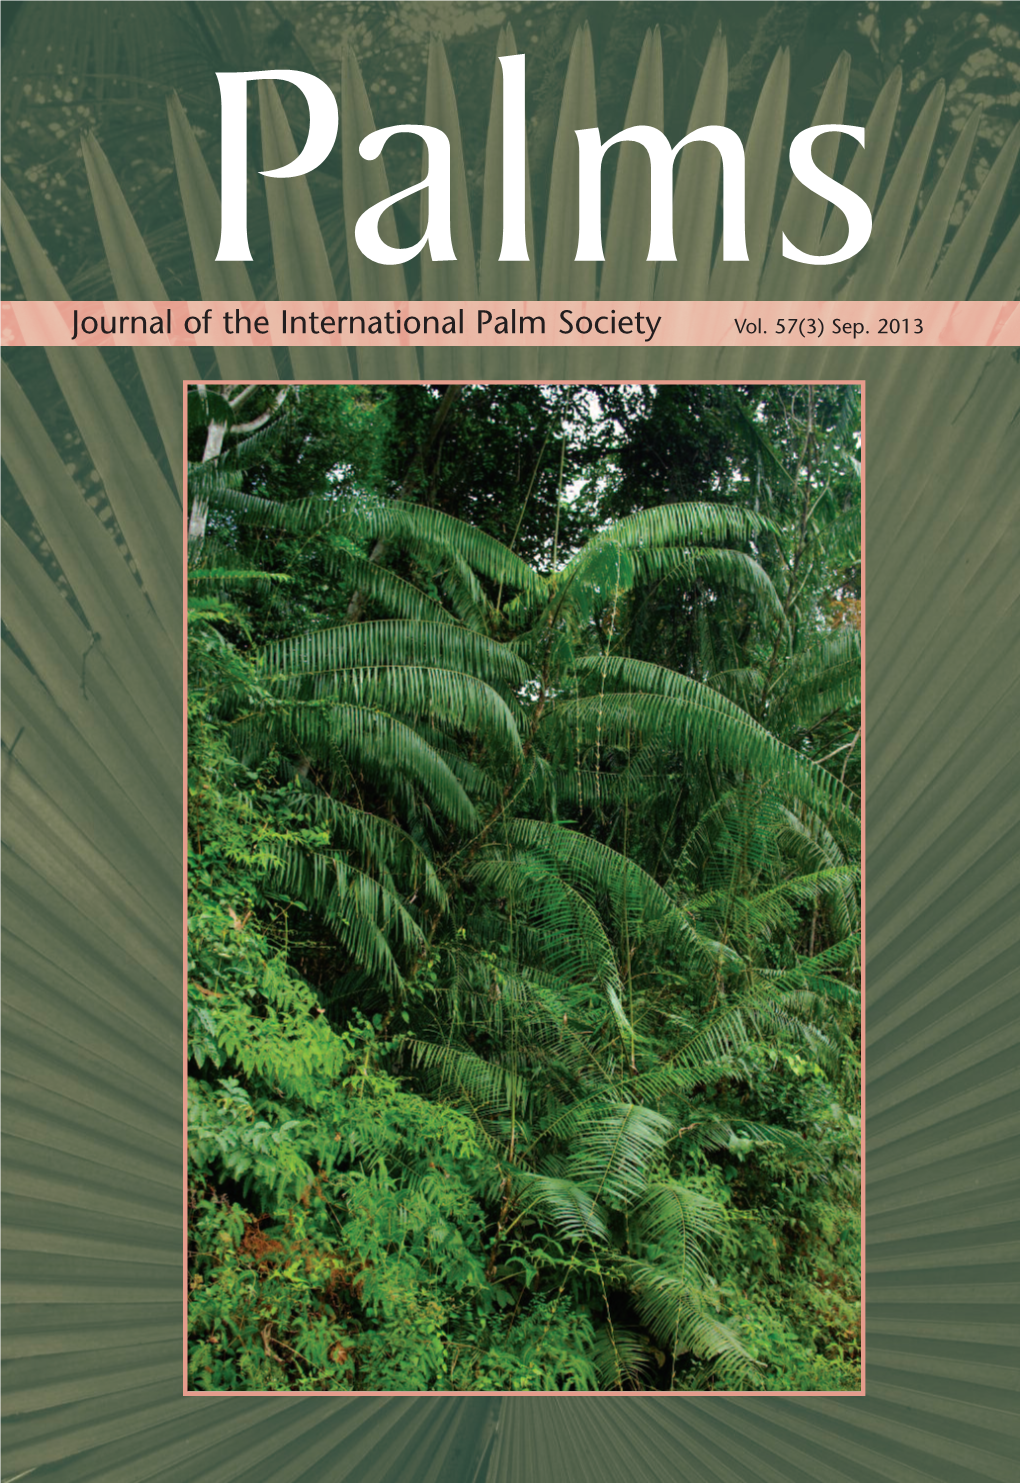 Journal of the International Palm Society Vol. 57(3) Sep. 2013 the INTERNATIONAL PALM SOCIETY, INC